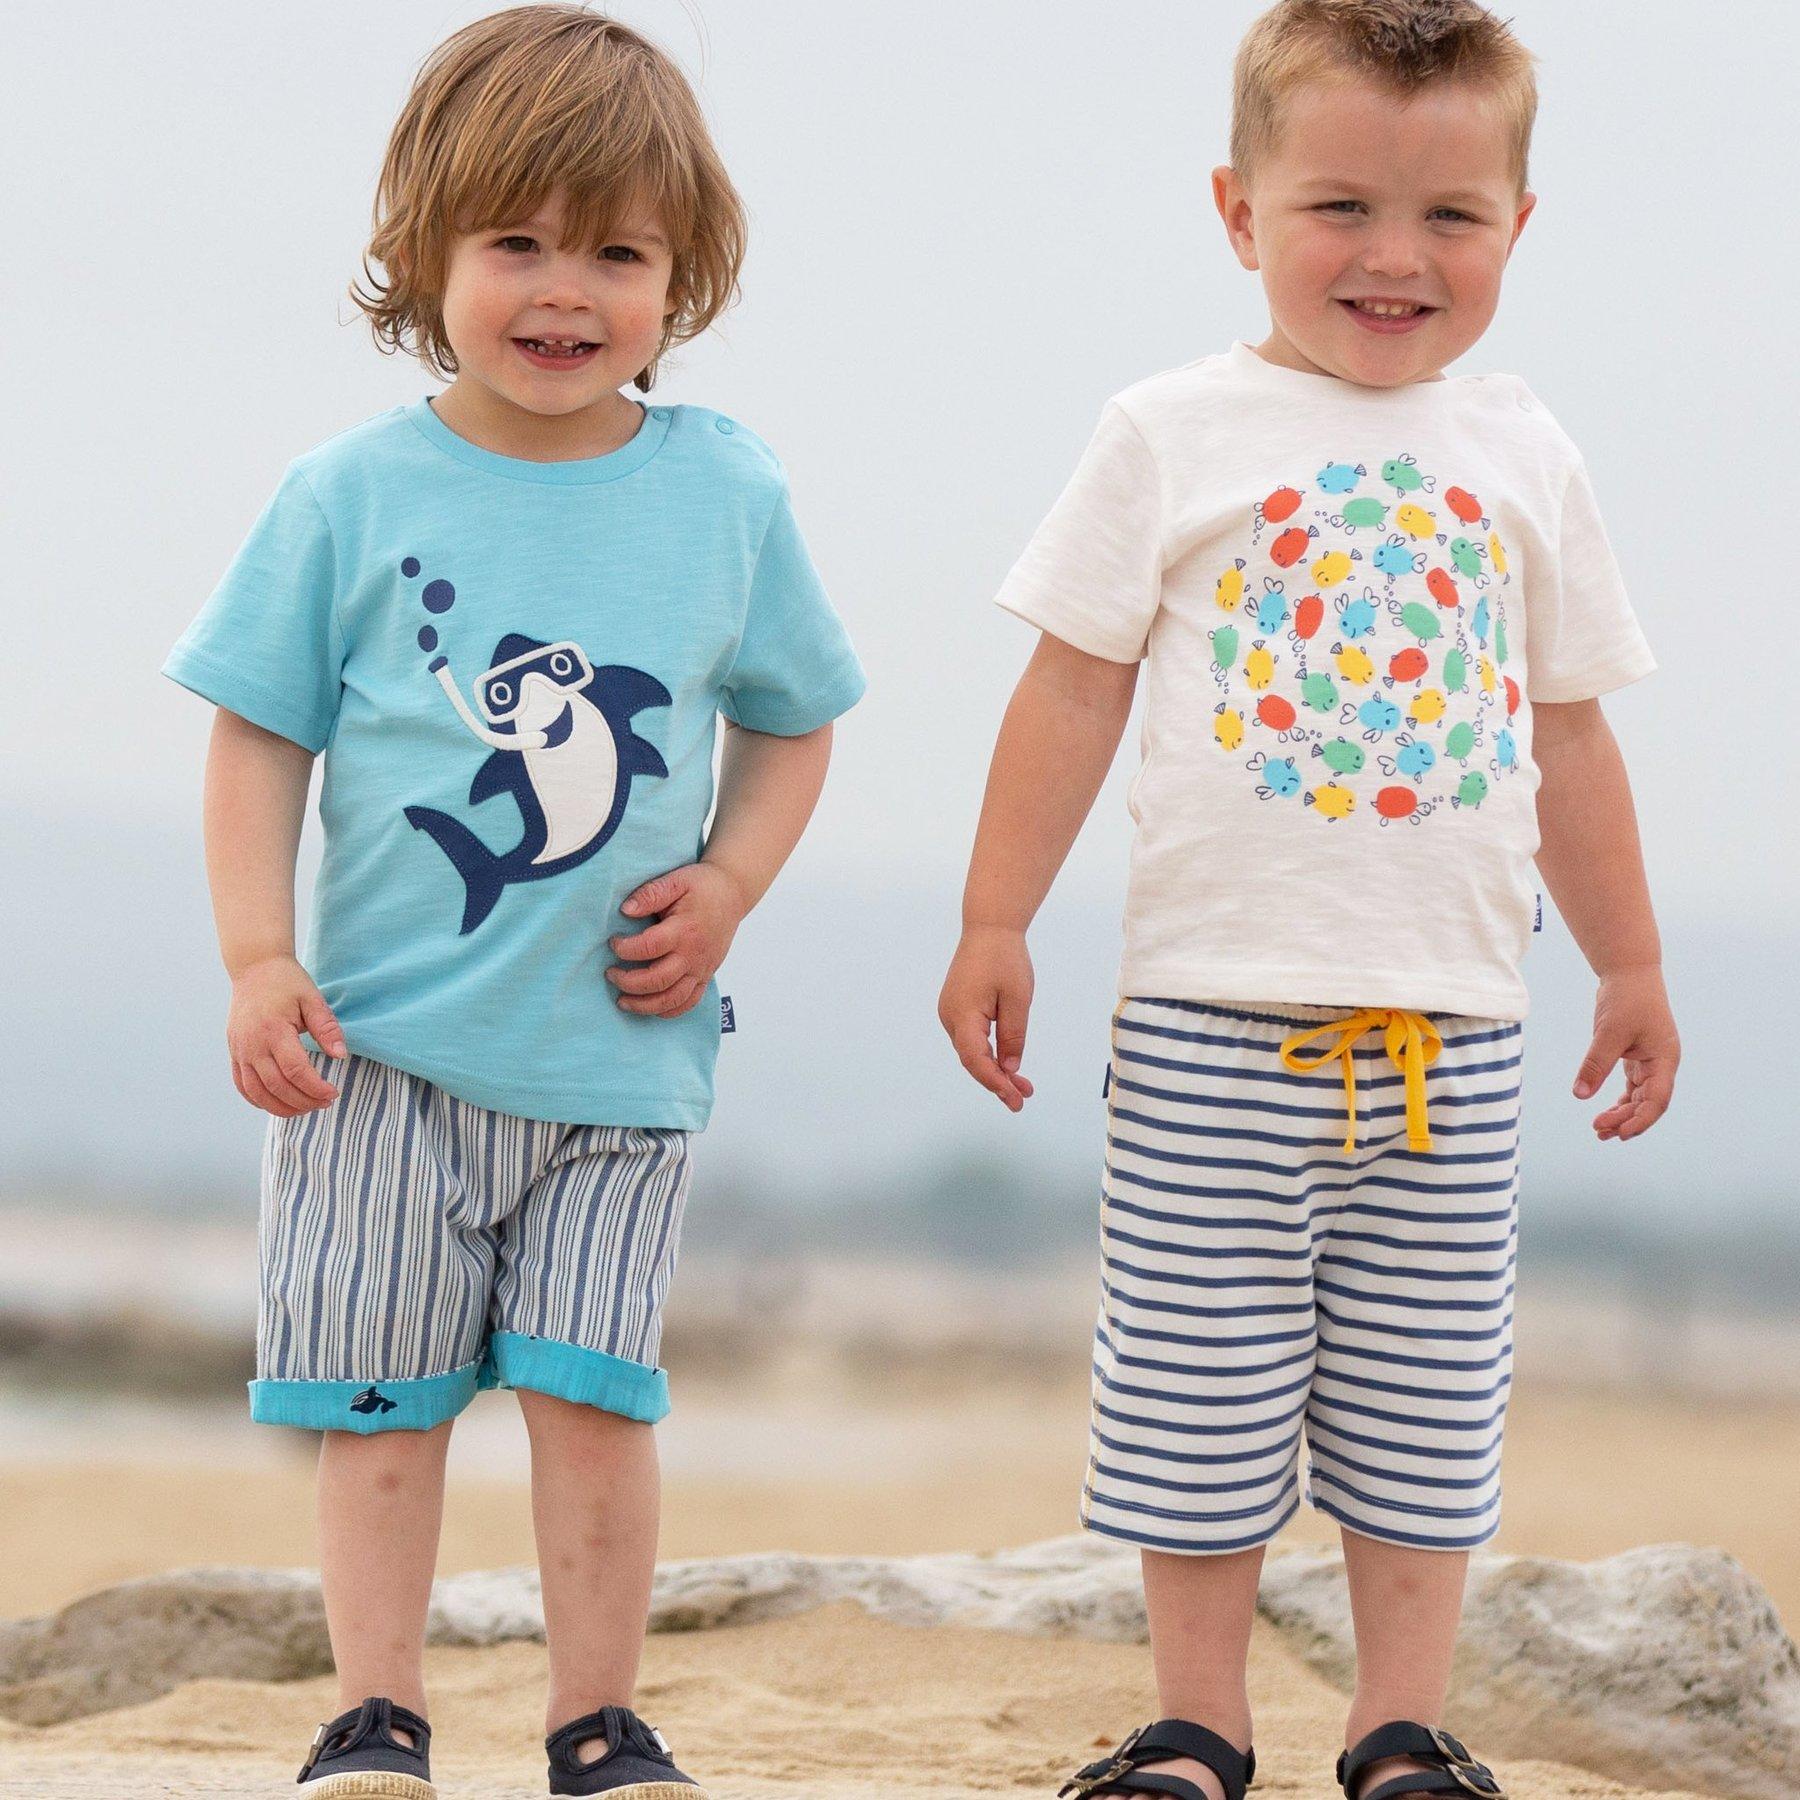 Boy wearing Kite Clothing Snorkel Shark T-Shirt with friend